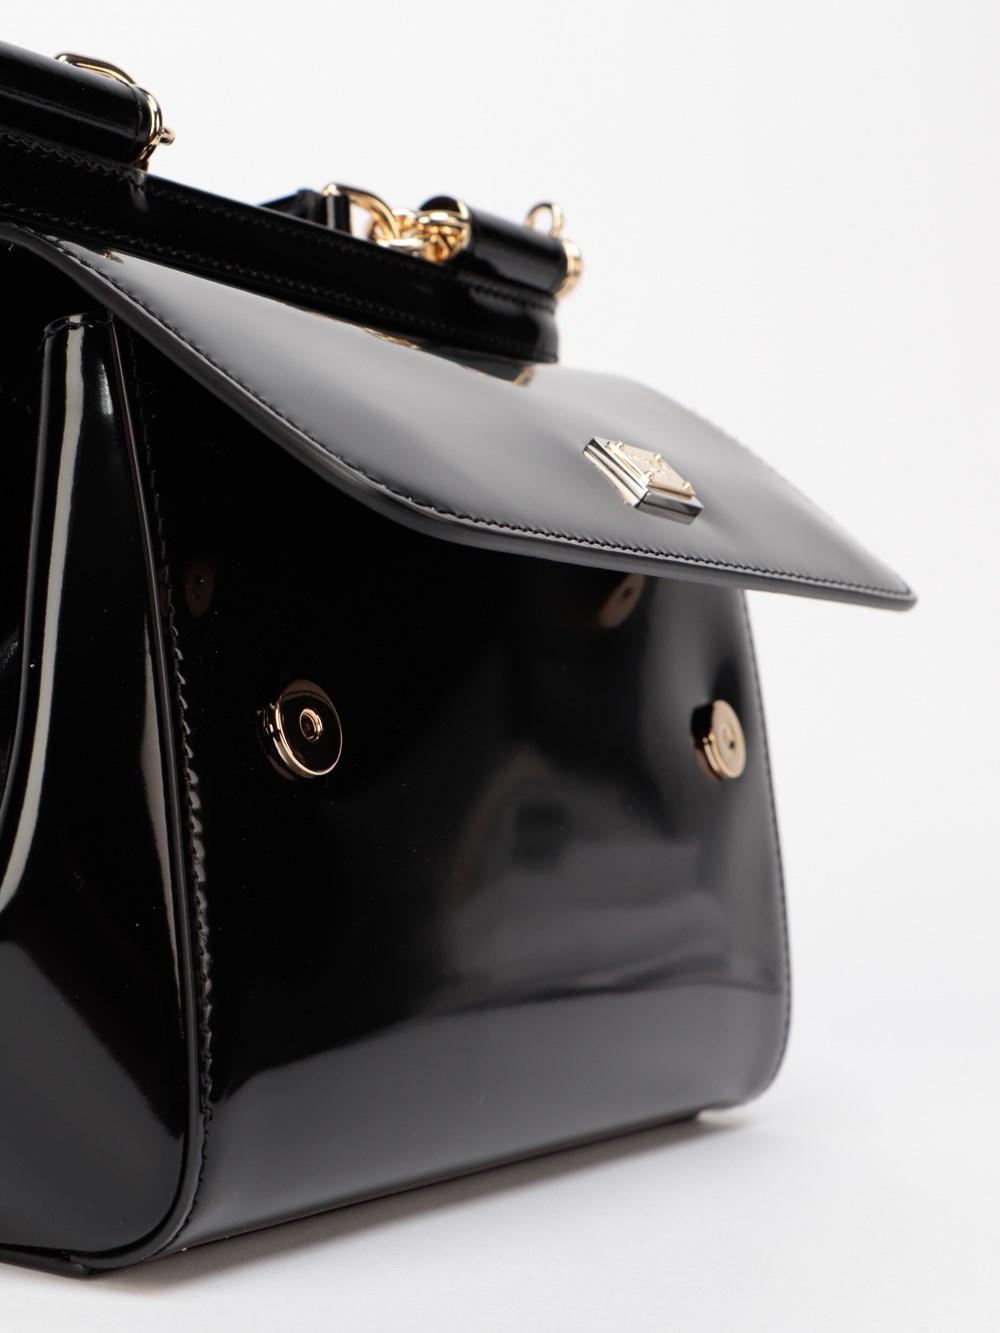 Dolce & Gabbana Polished Leather Small `Sicily` Bag - ShopStyle